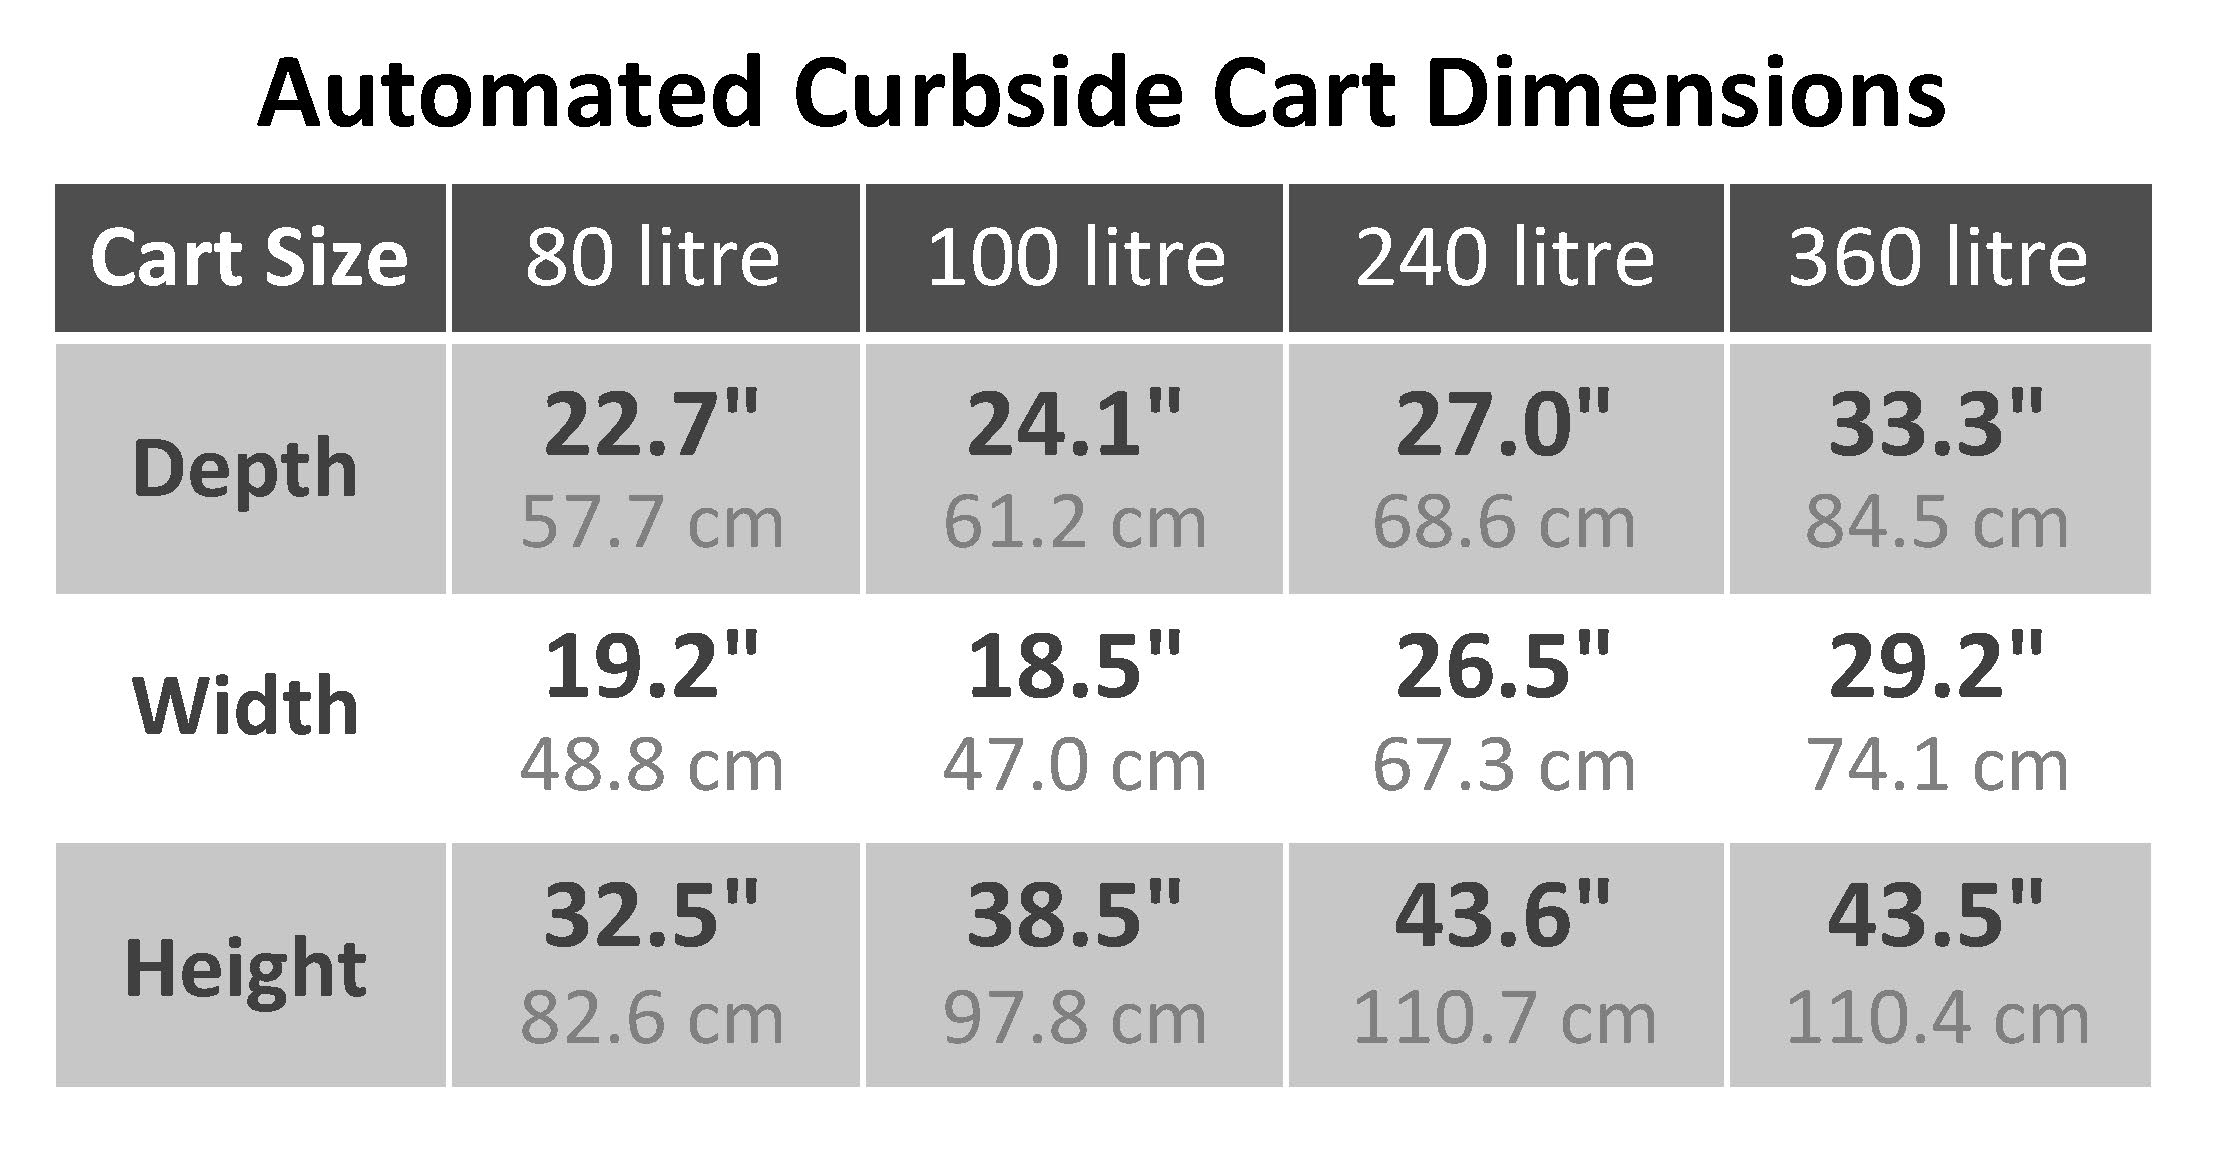 Curbside cart dimensions